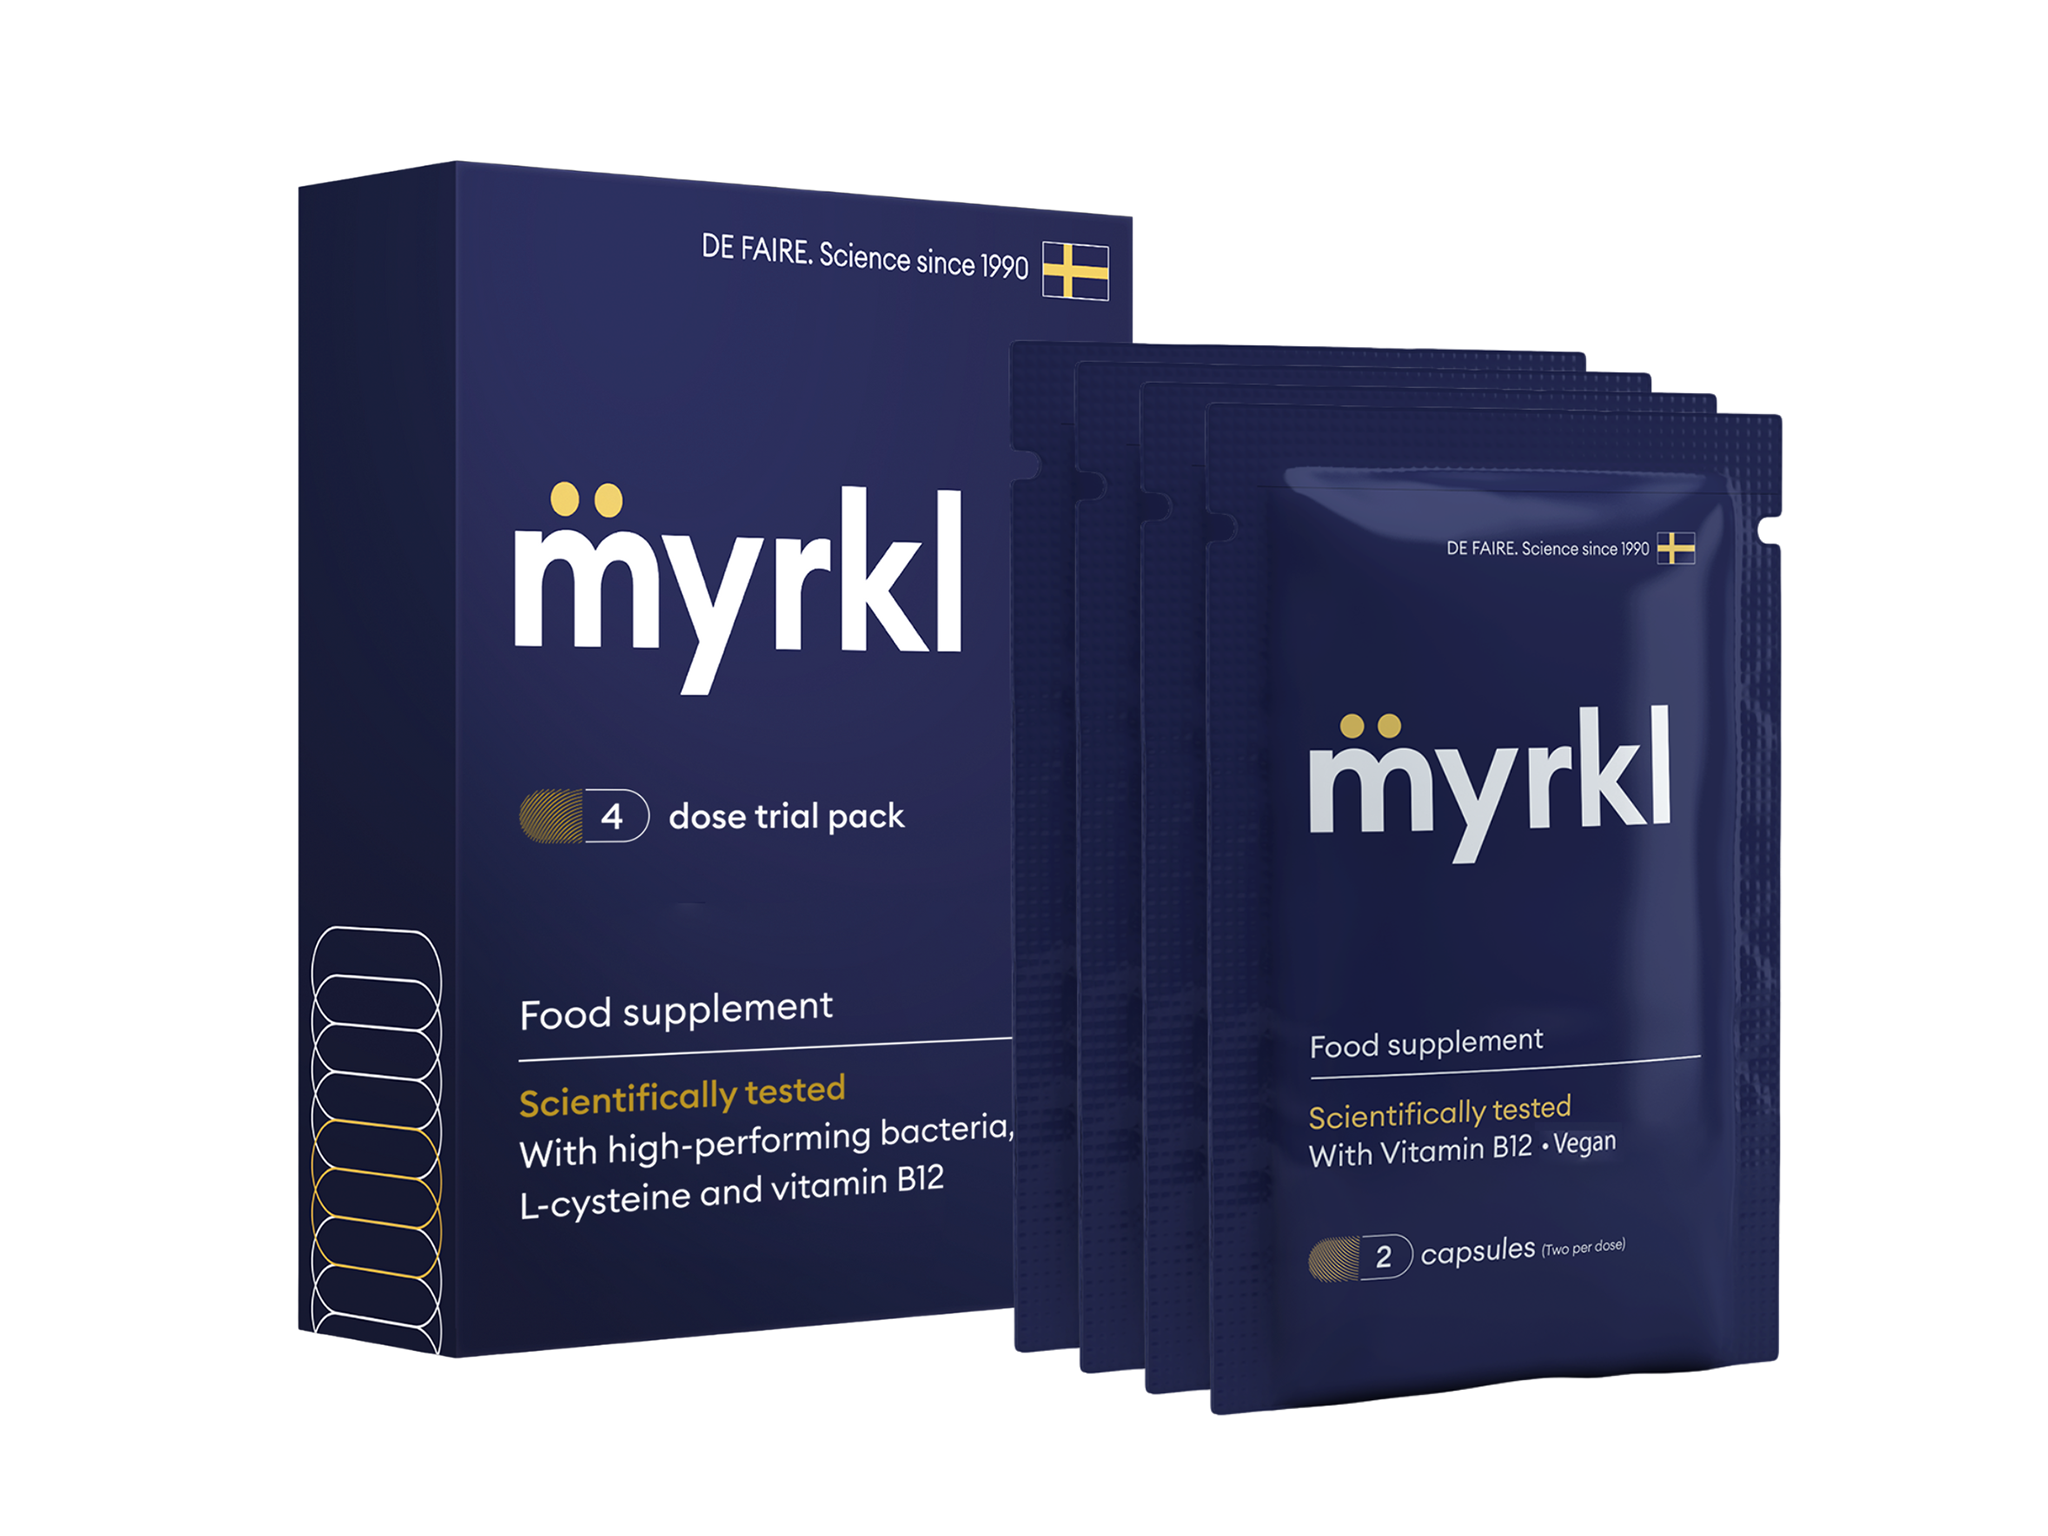 Myrkl 4 dose trial pack